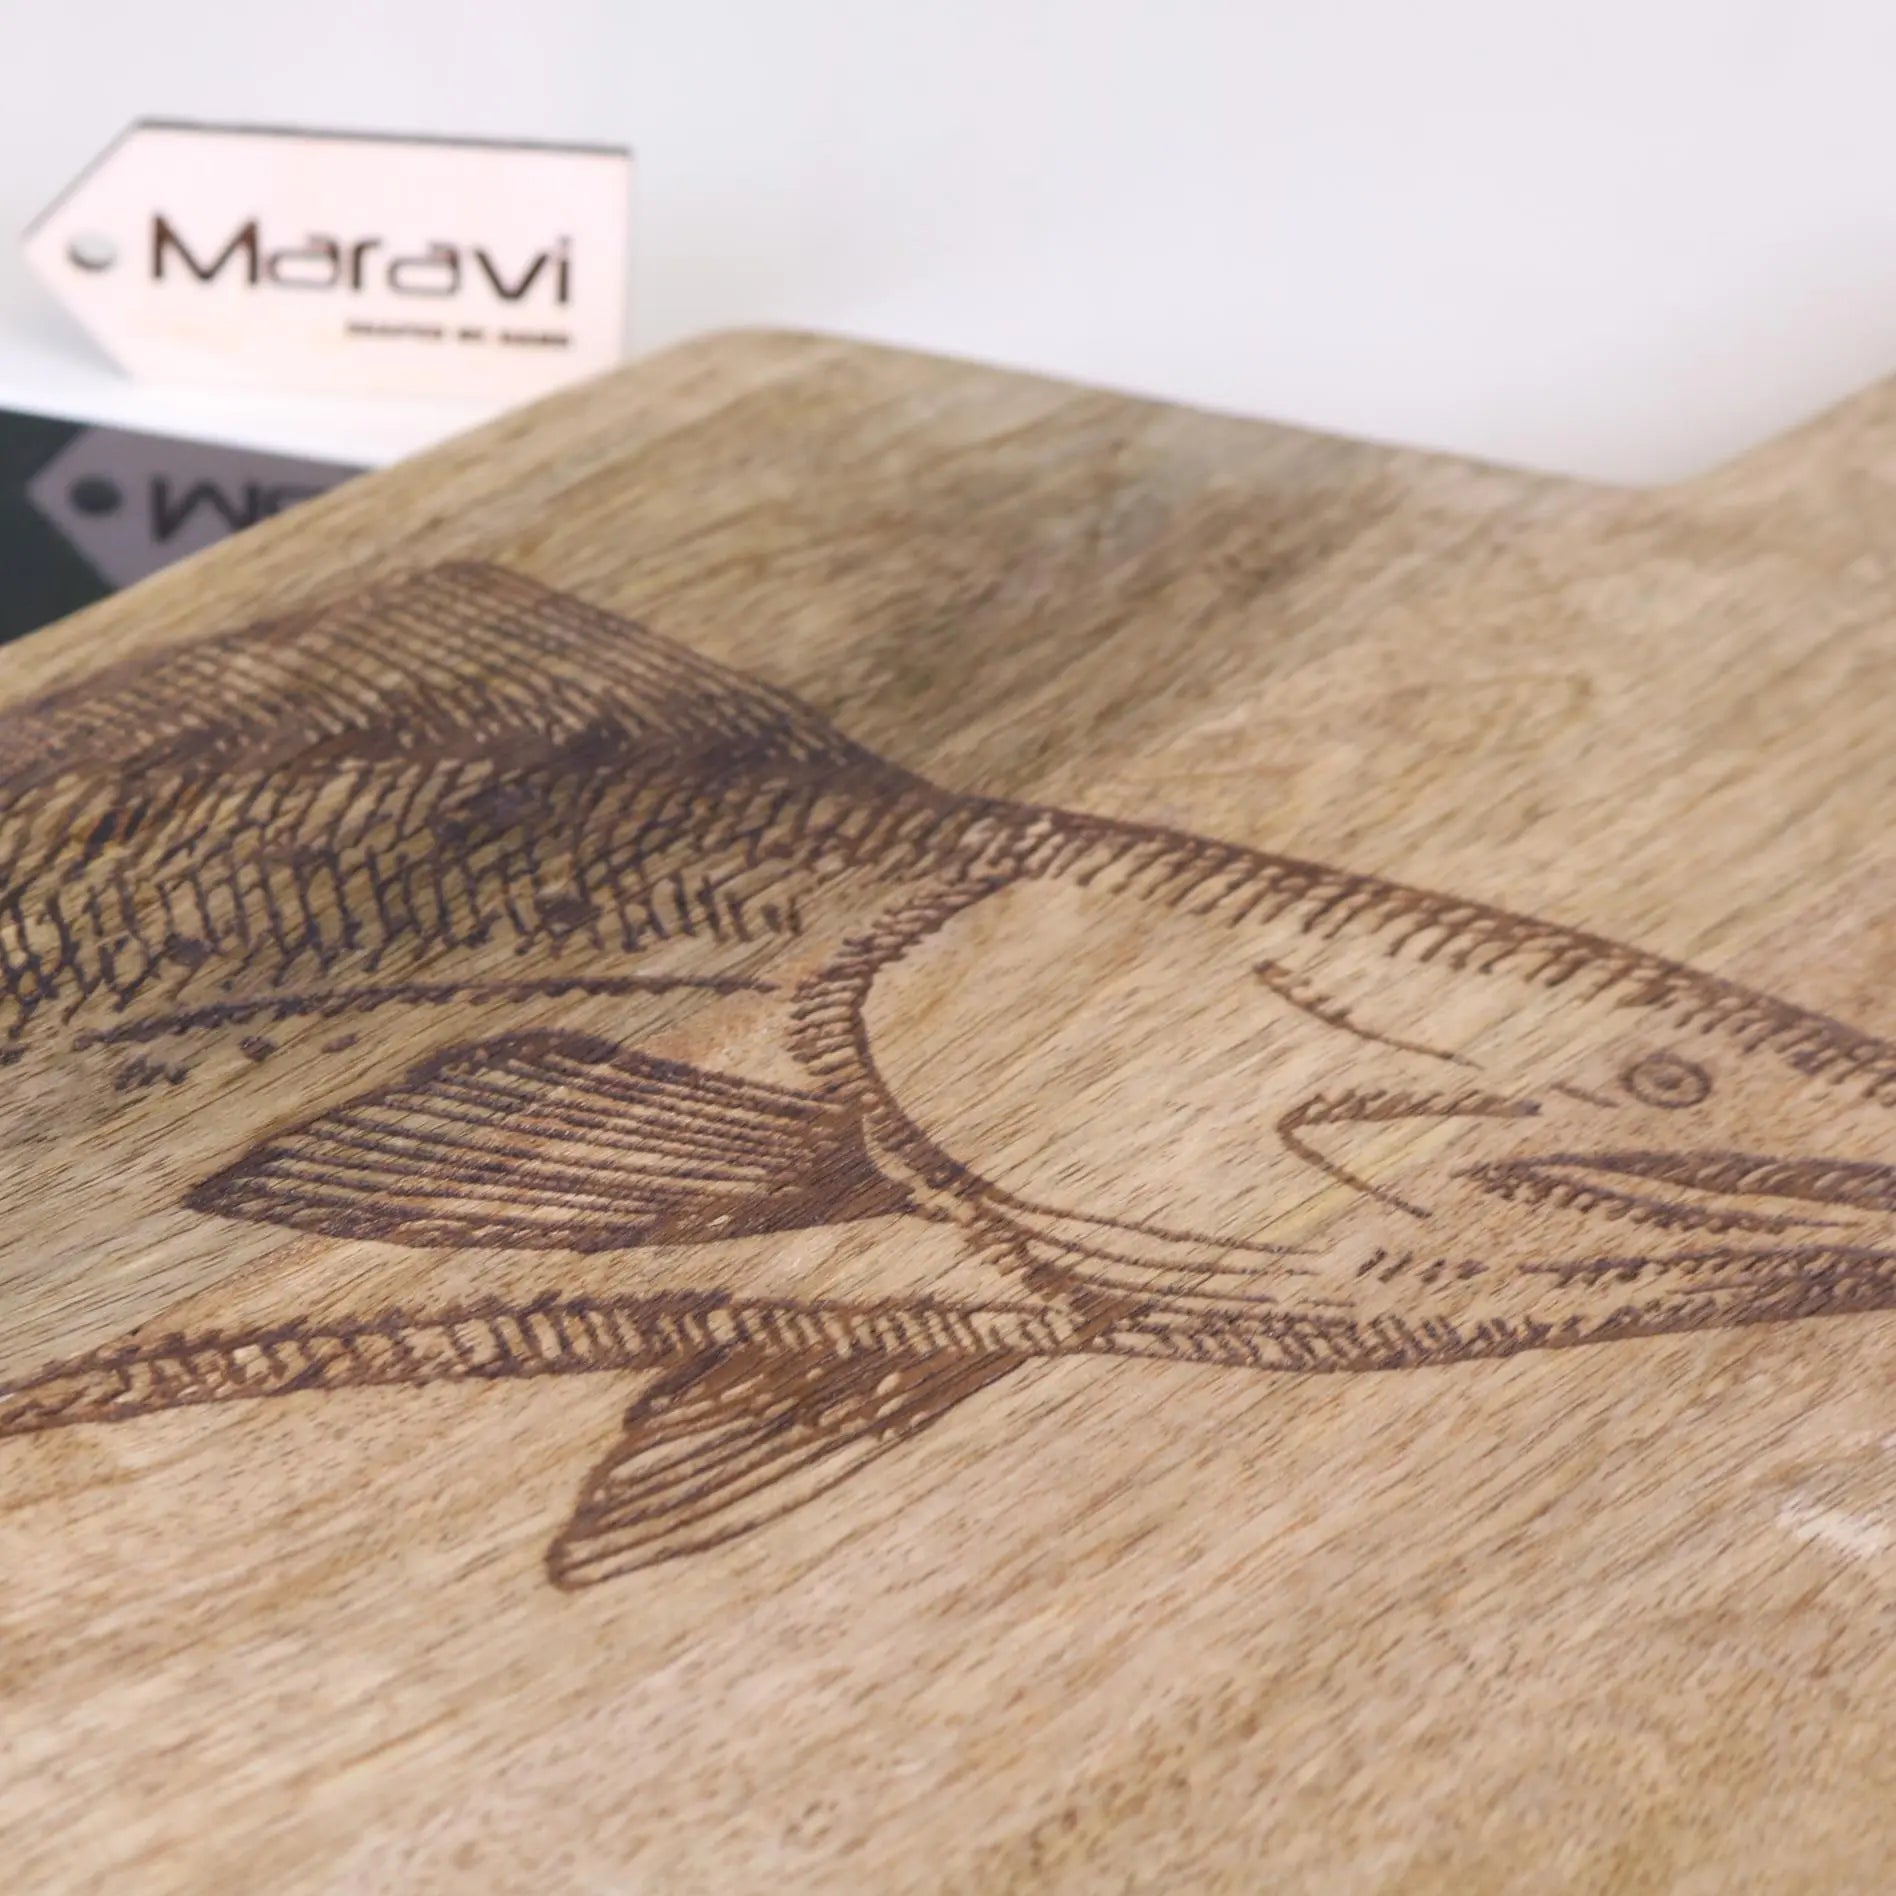 Rateka 50cm Engraved Seafood Serving Board Fish Design Closeup of Engraving